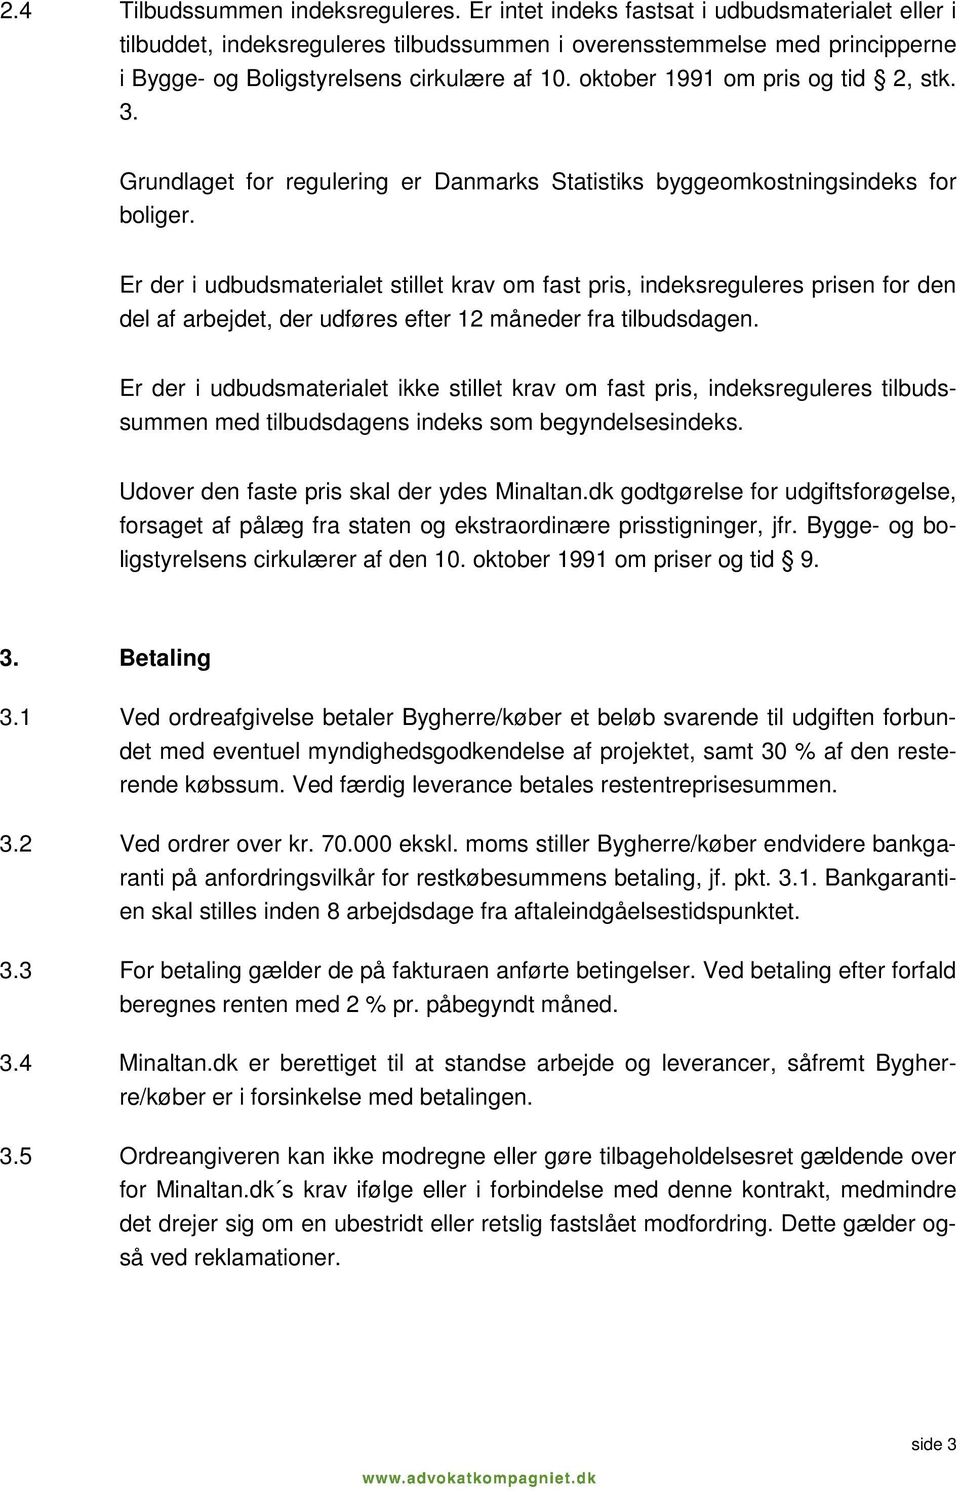 oktober 1991 om pris og tid 2, stk. 3. Grundlaget for regulering er Danmarks Stistiks byggeomkostningsindeks for boliger.